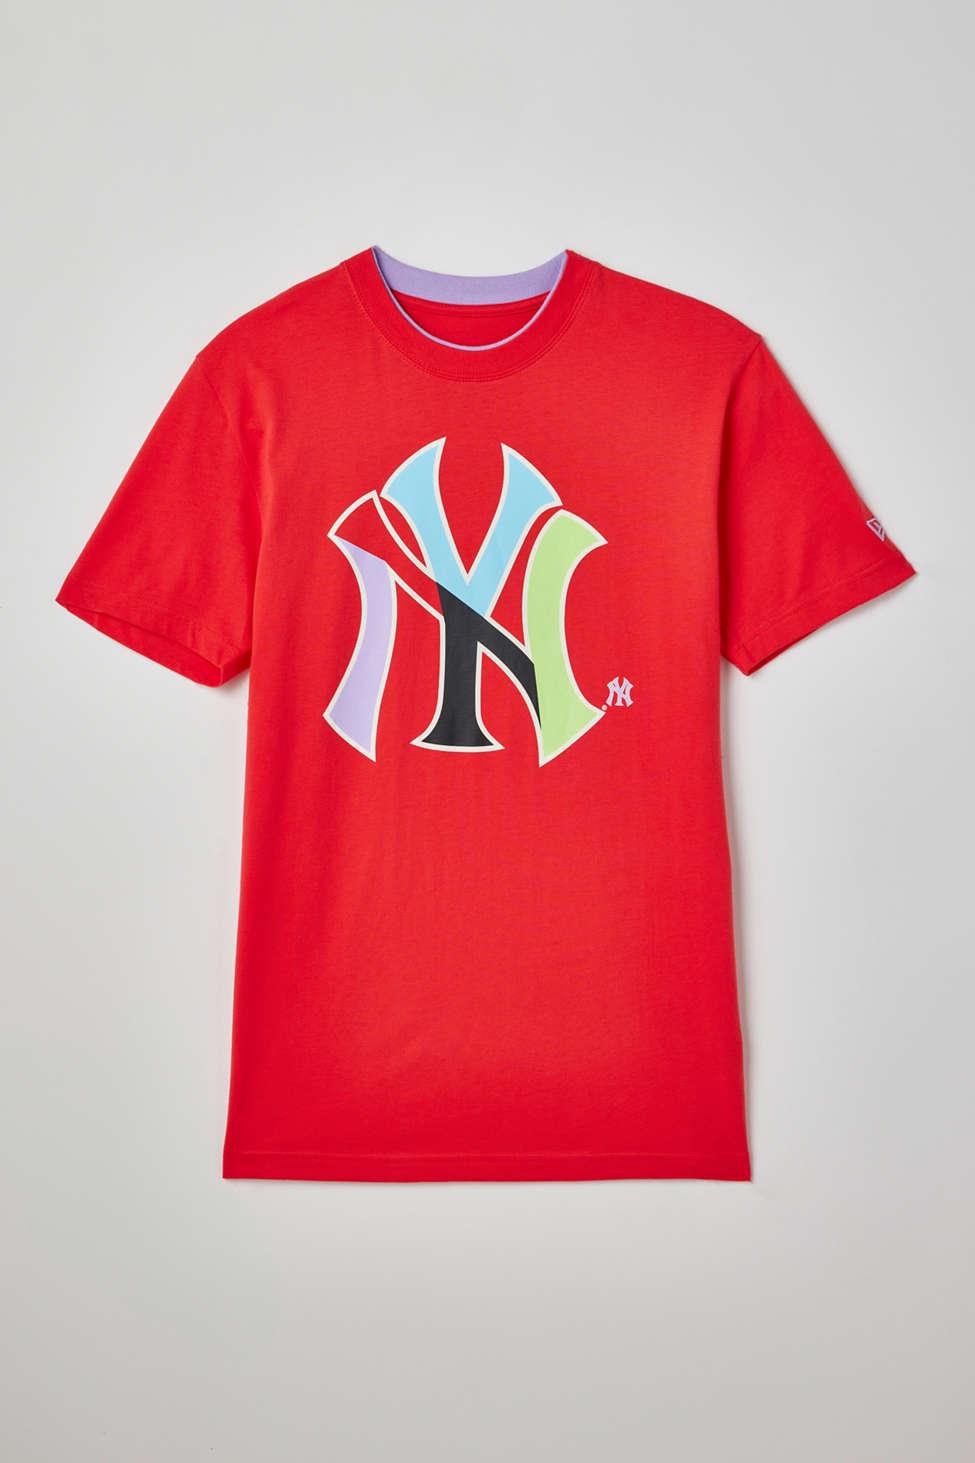 KTZ New York Yankees Colorpack Pinkblock Tee in Red for Men